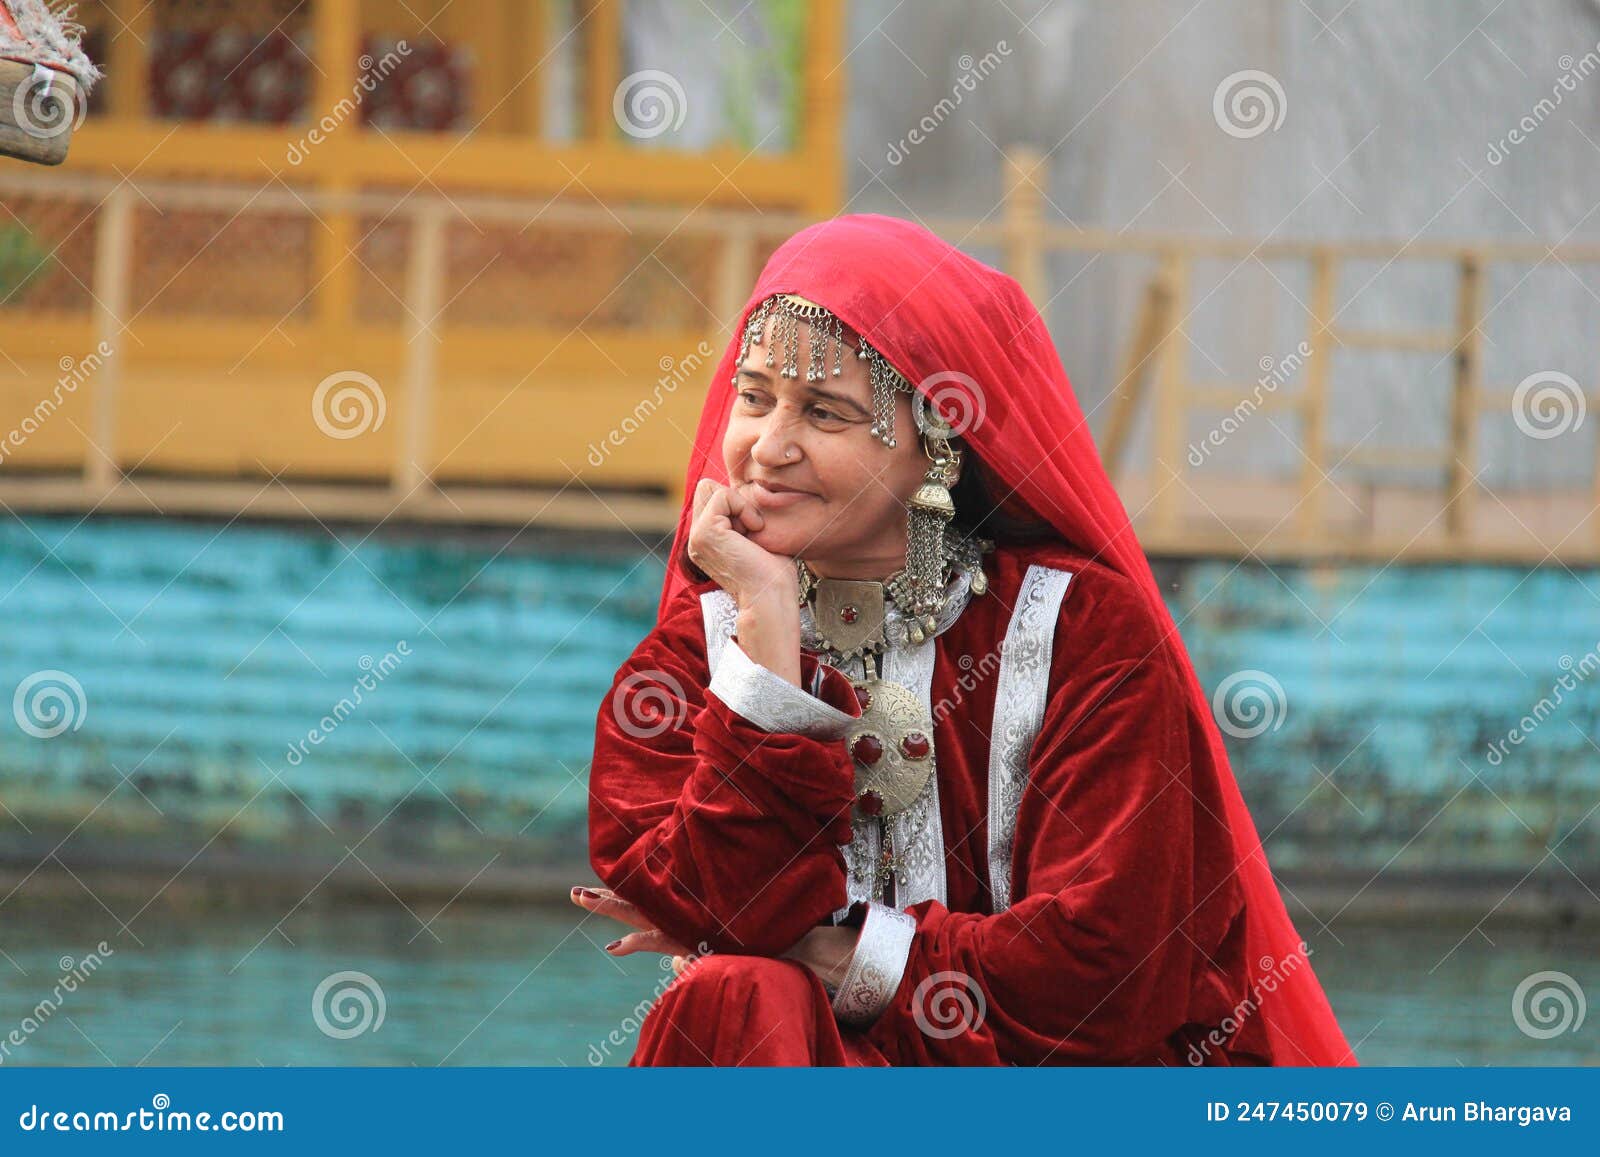 1,209 Kashmiri Dress Images, Stock Photos & Vectors | Shutterstock